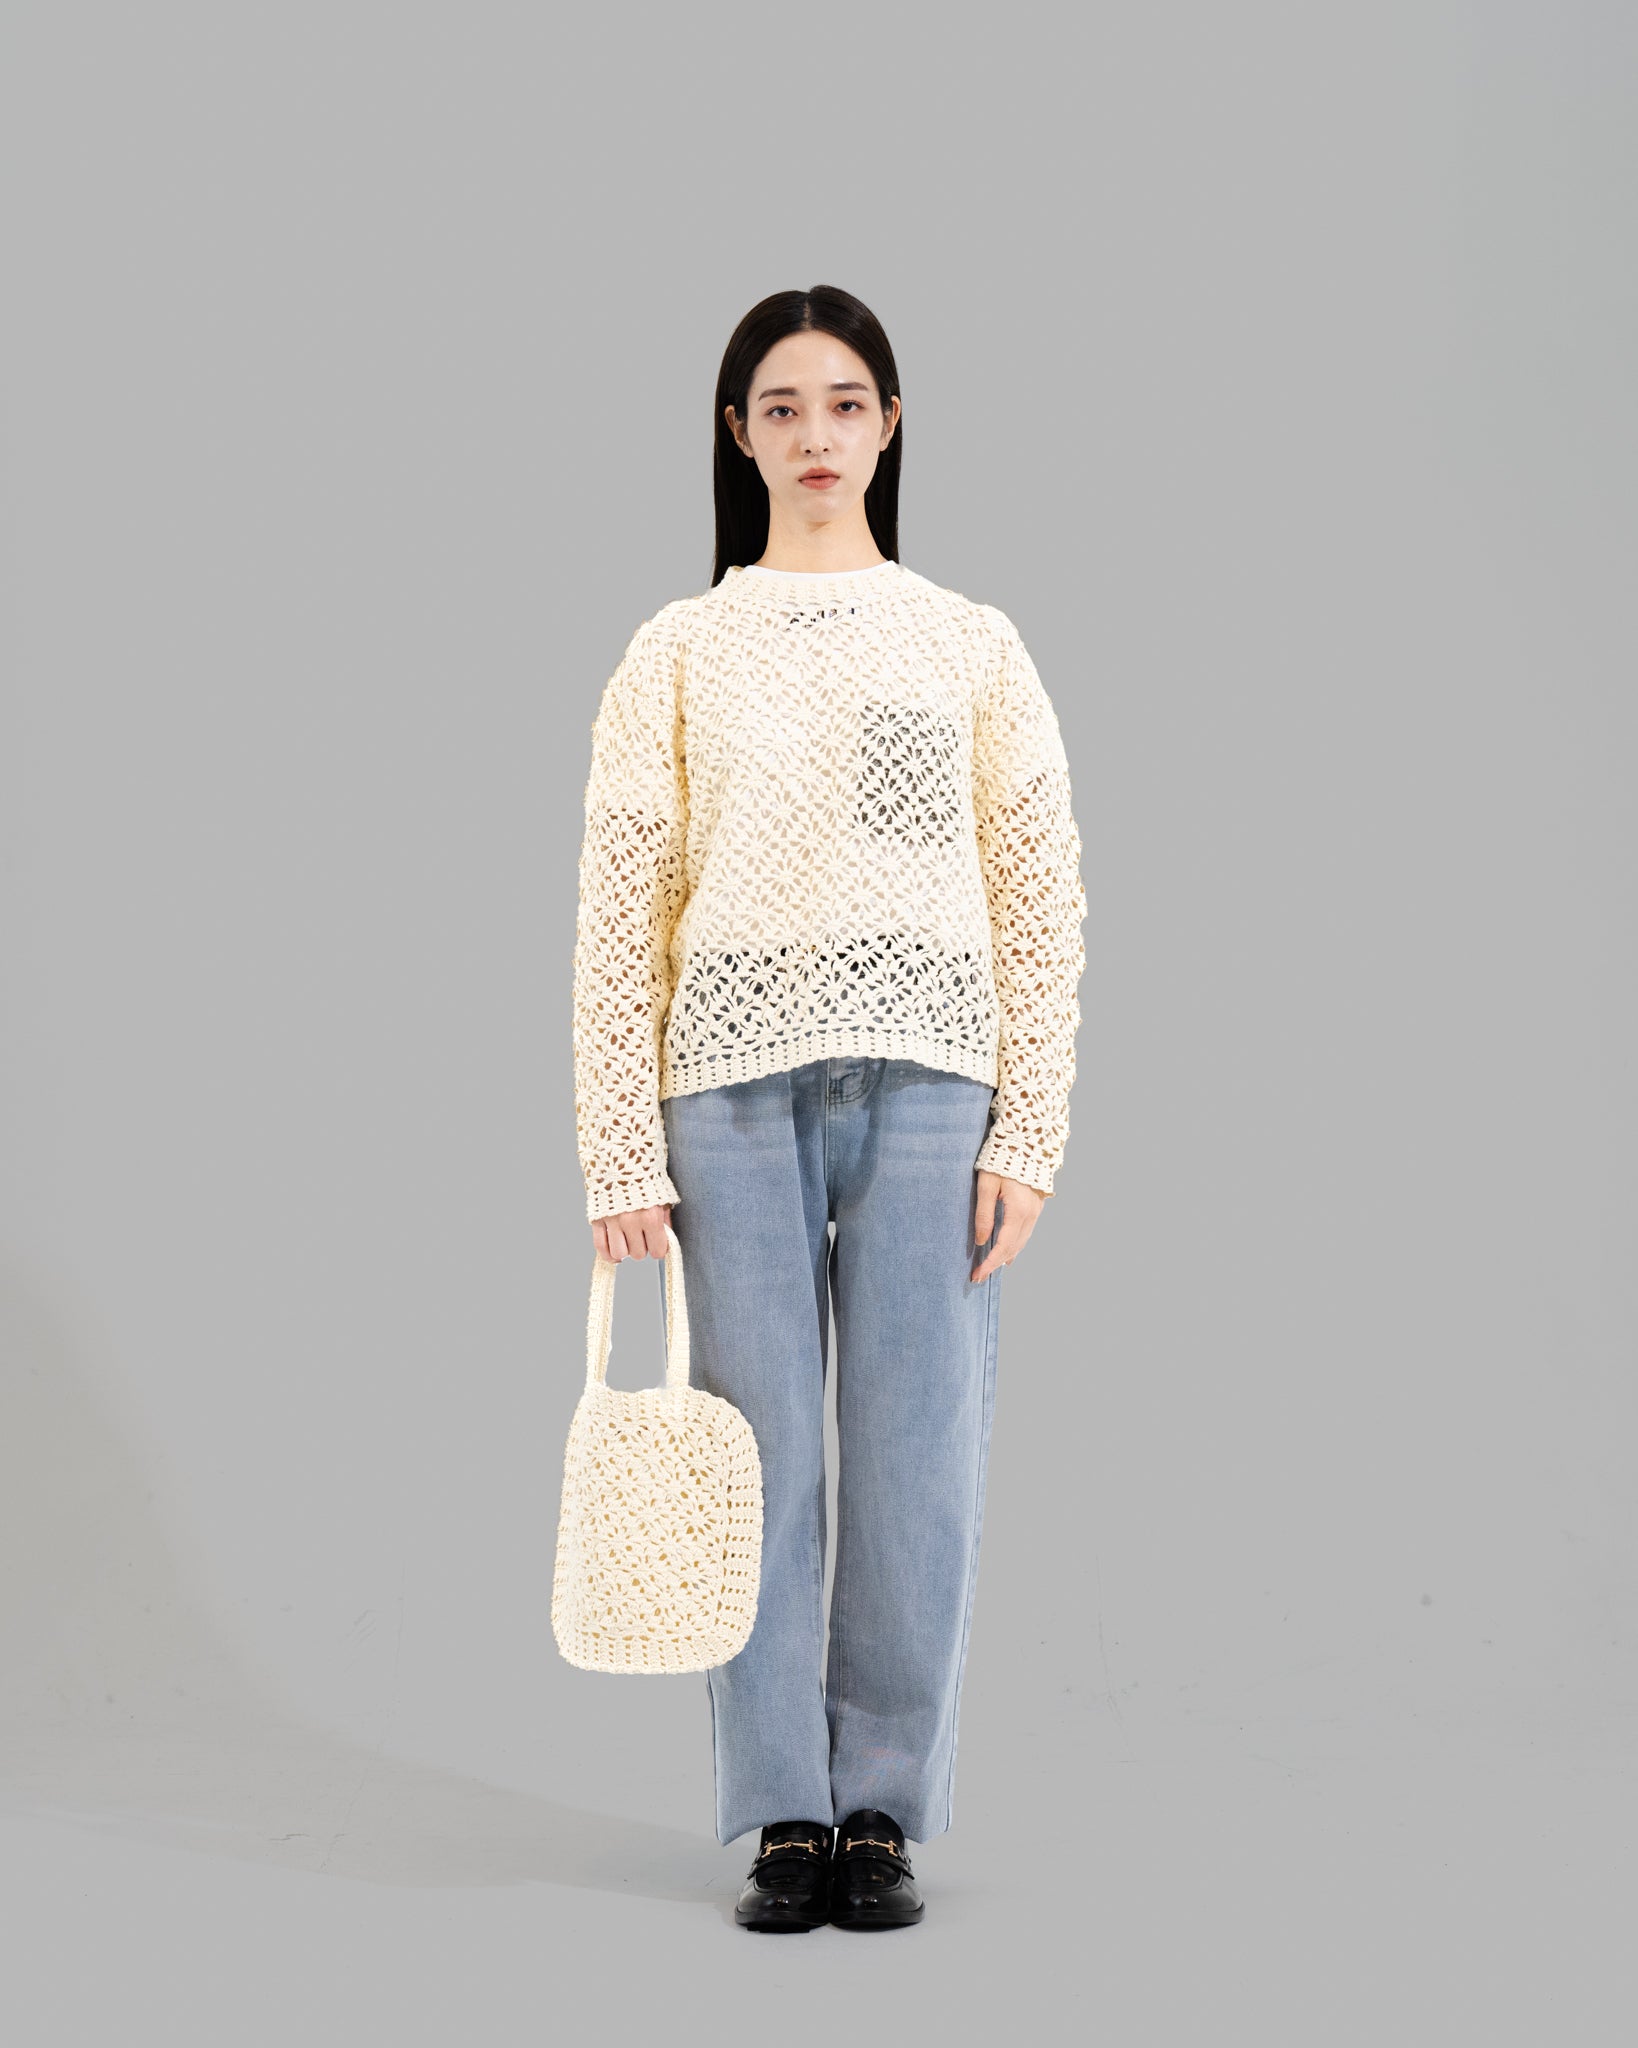 Crochet Hand Knit Tote Bag -Off White